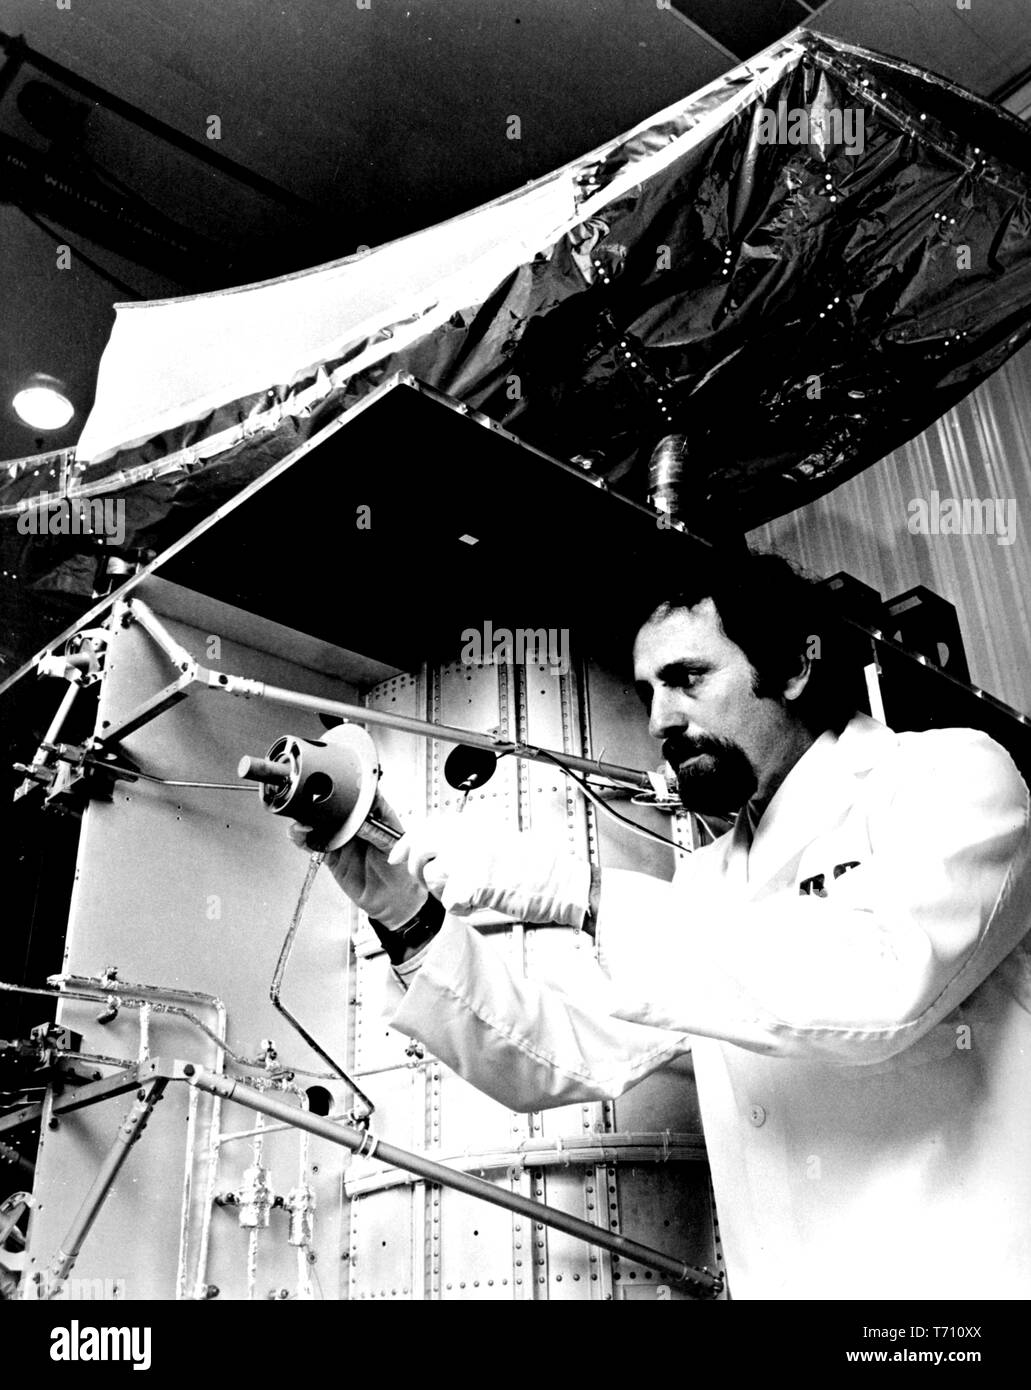 RCA engineer Joel Bacher adjusting a propulsion thruster on the RCA Satcom domestic communication satellite, December 10, 1975. Image courtesy National Aeronautics and Space Administration (NASA). () Stock Photo